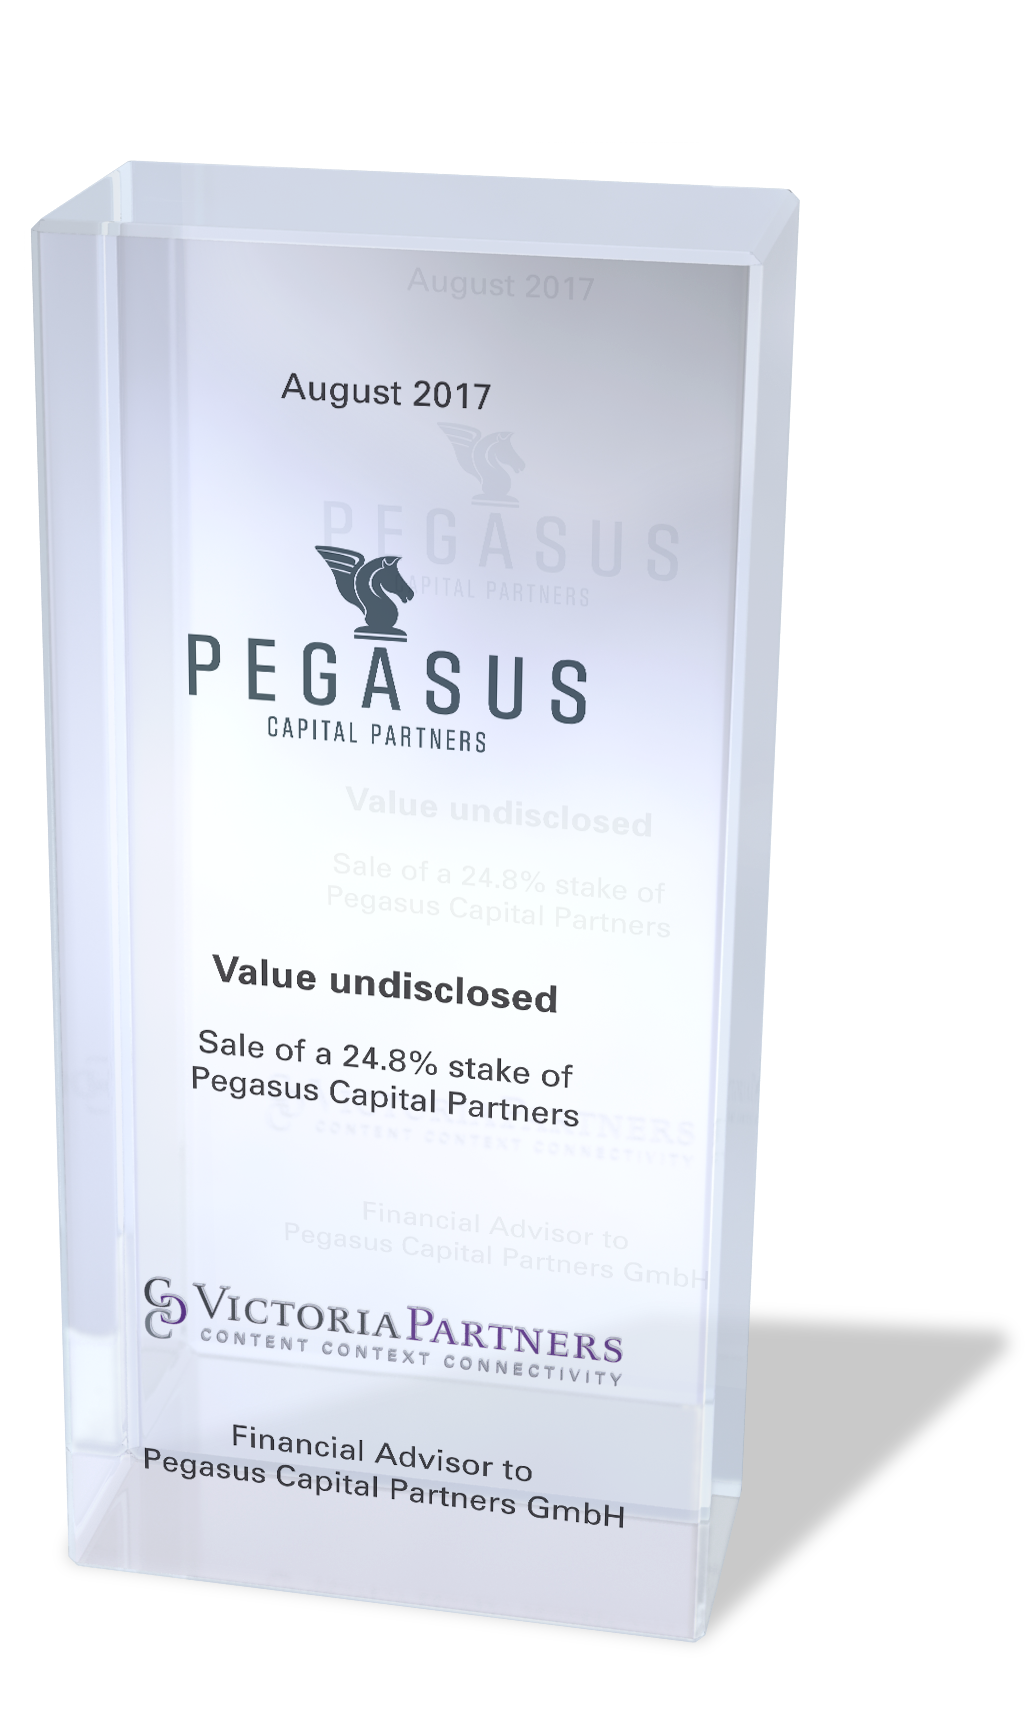 VICTORIAPARTNERS - Financial Advisor to Pegasus Capital Partners GmbH - August 2017